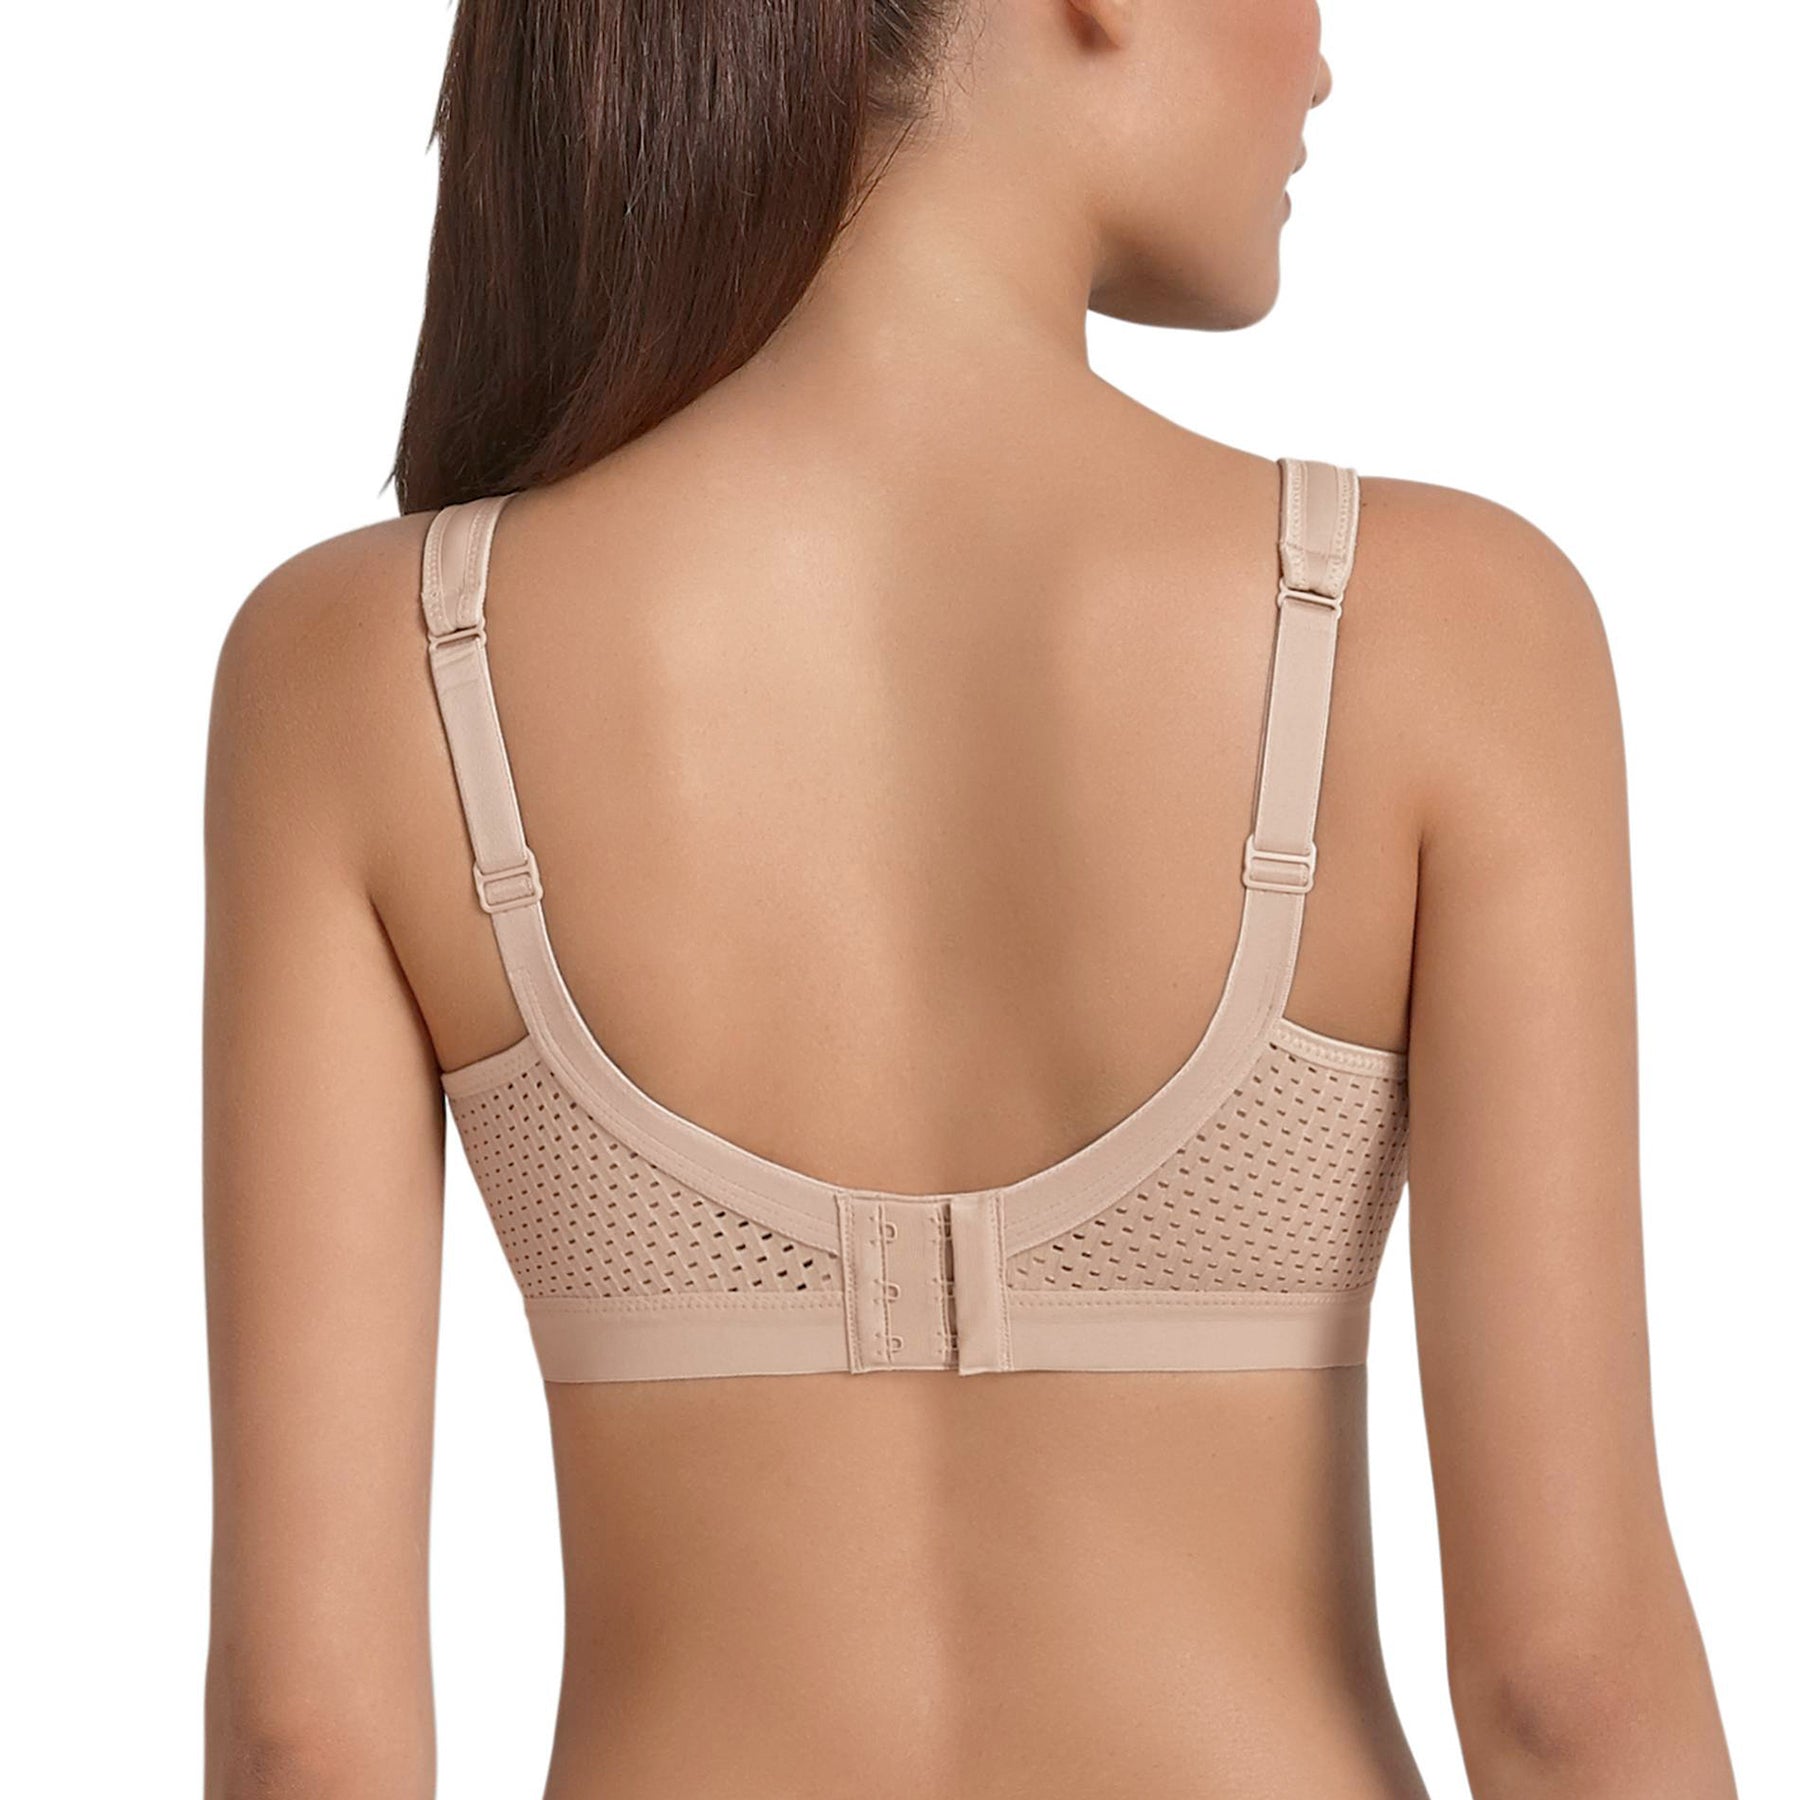 Carole Hochman comfort bra (medium)from USA